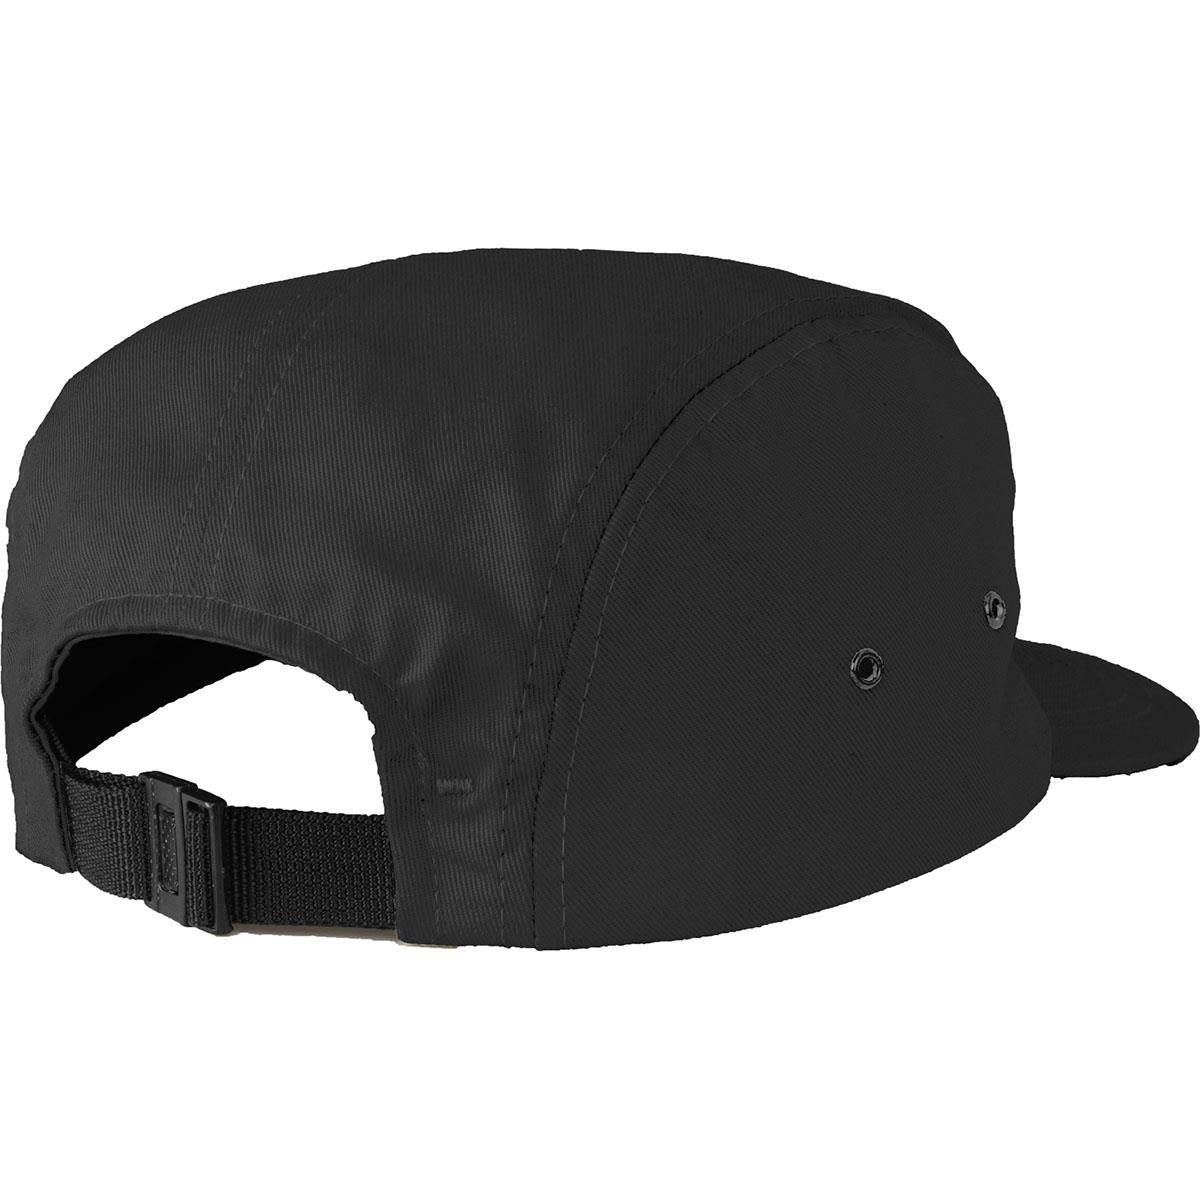 'Flat Line' - Black/Light Olive 5-Panel Hat Fabric: 100% Cotton twill